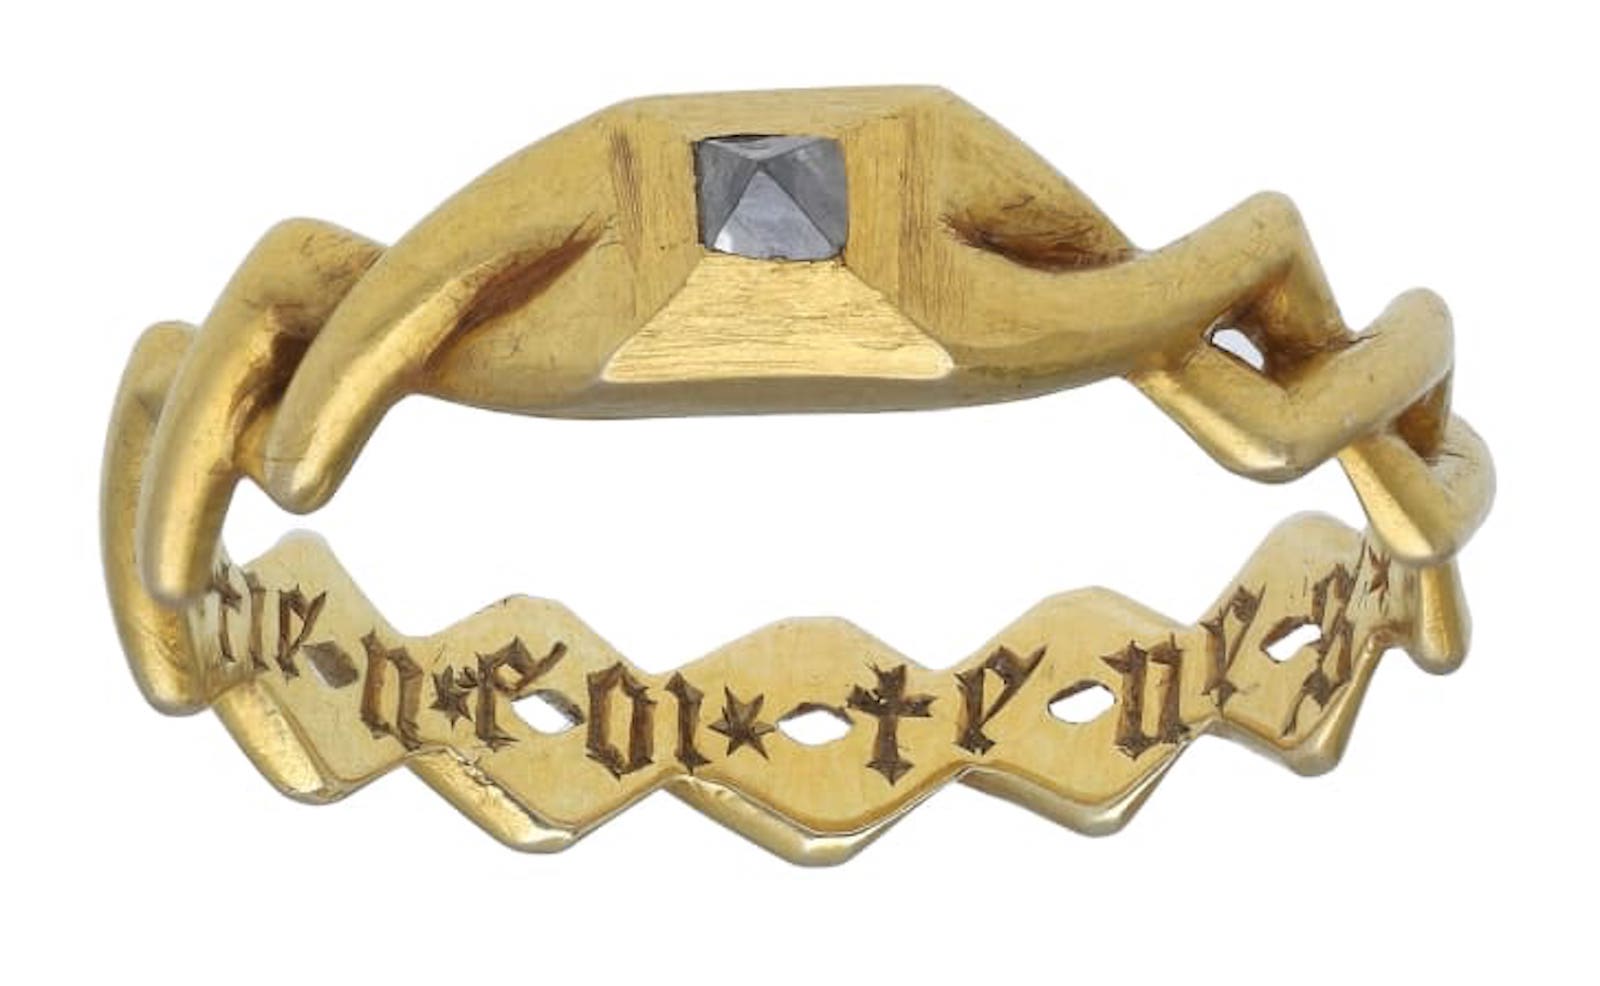 Buscador descubre un anillo de medieval de un valor estimado de US$